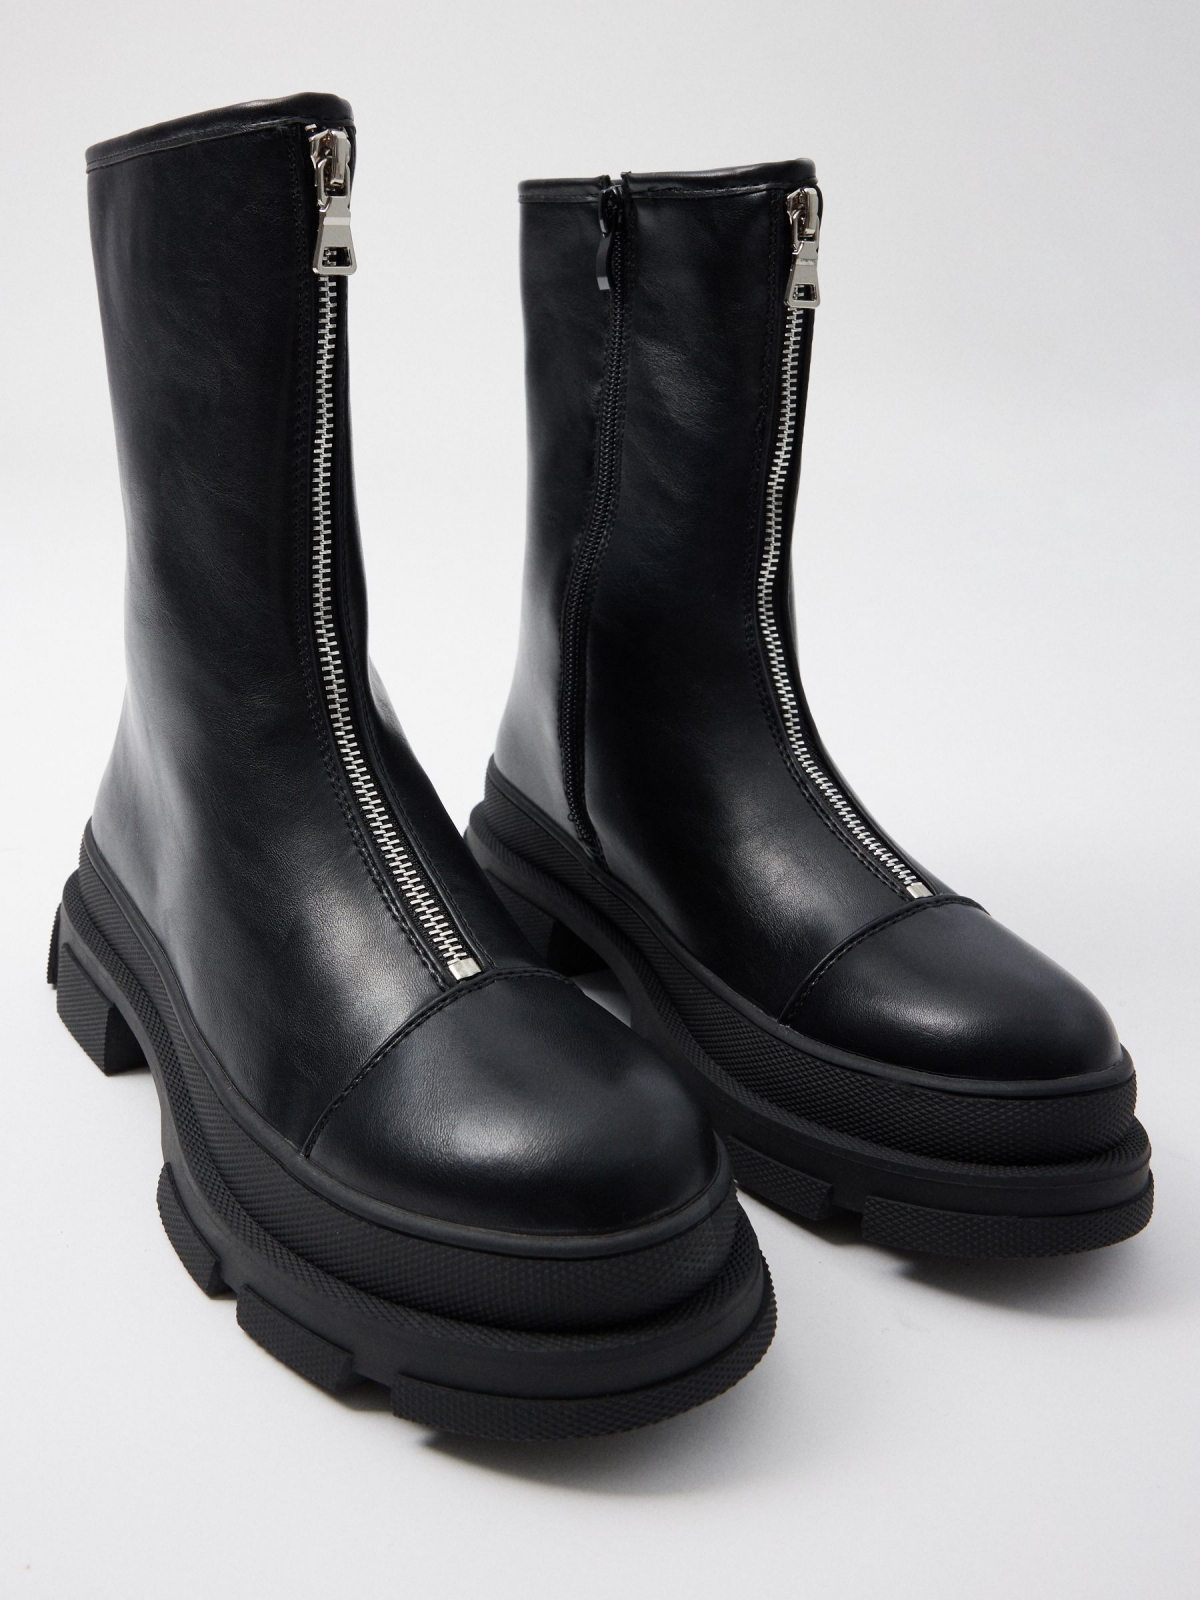 Fashion zipper ankle boots black detail view